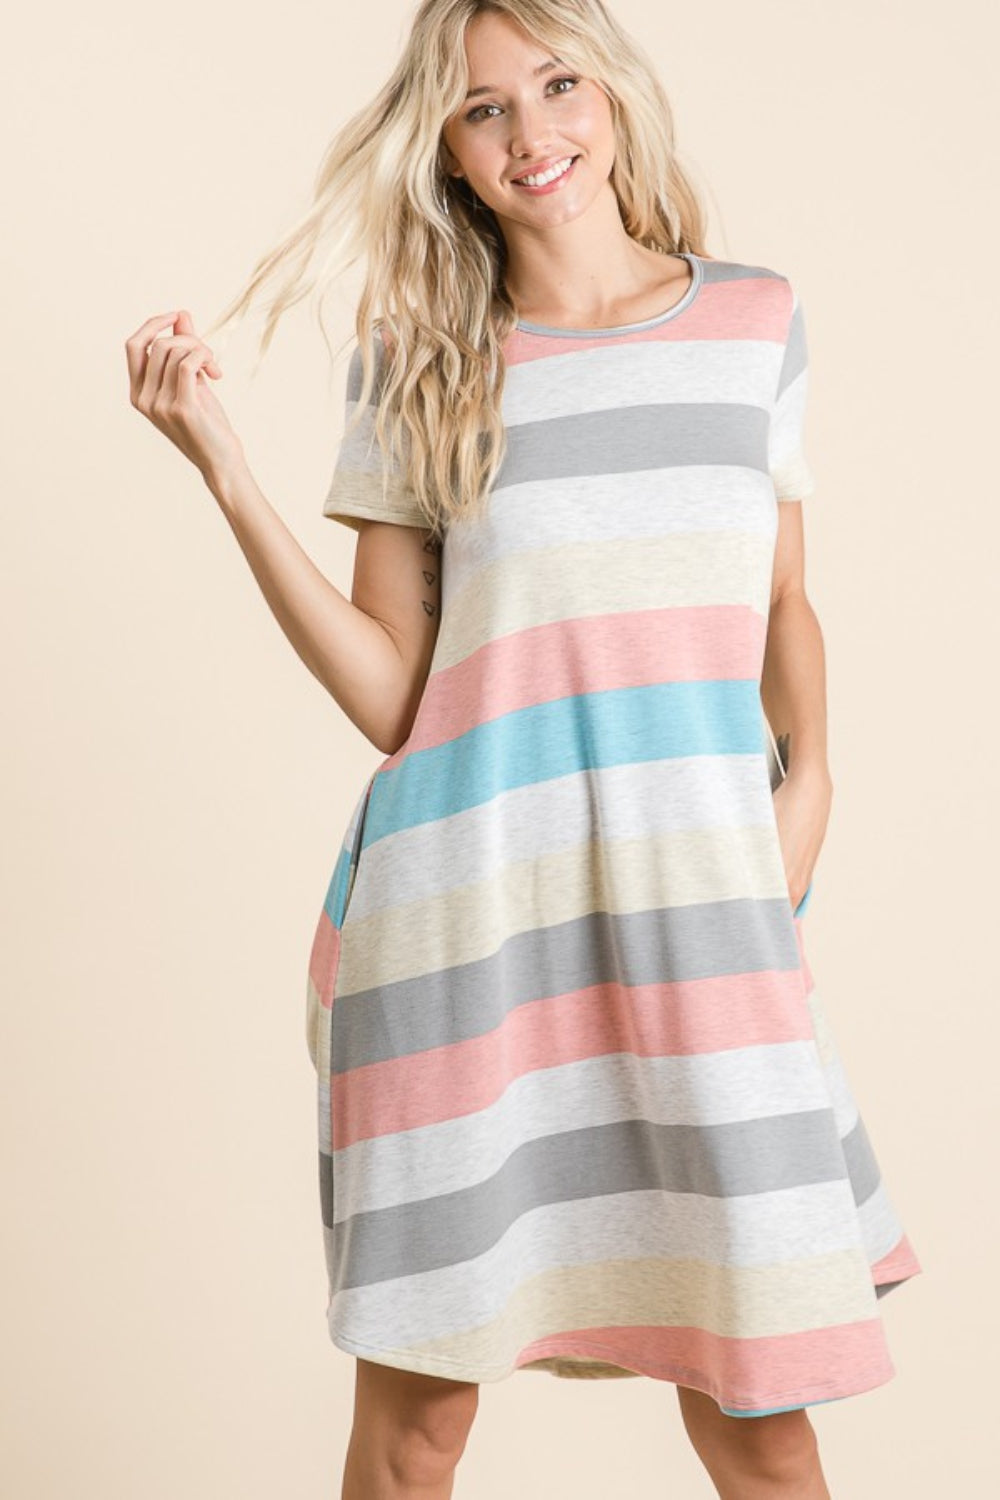 BOMBOM Striped Short Sleeve Dress with Pockets - Tigbul's Variety Fashion Shop